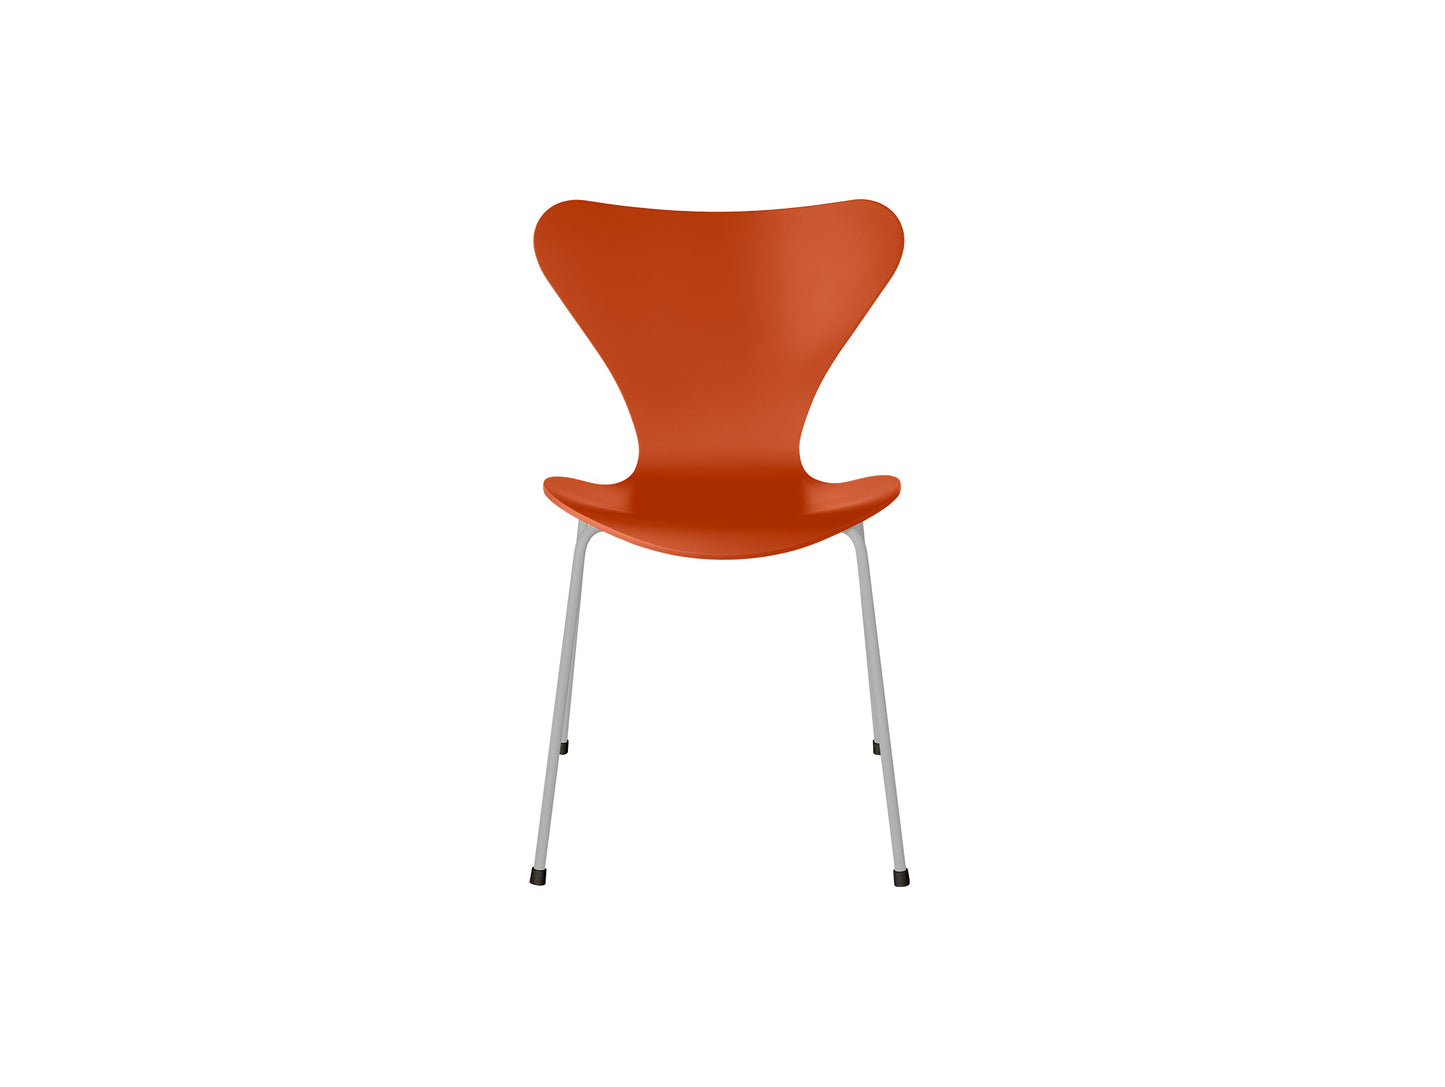 Series 7™ 3107 Dining Chair by Fritz Hansen - Paradise Orange Lacquered Veneer Shell / Nine Grey Steel